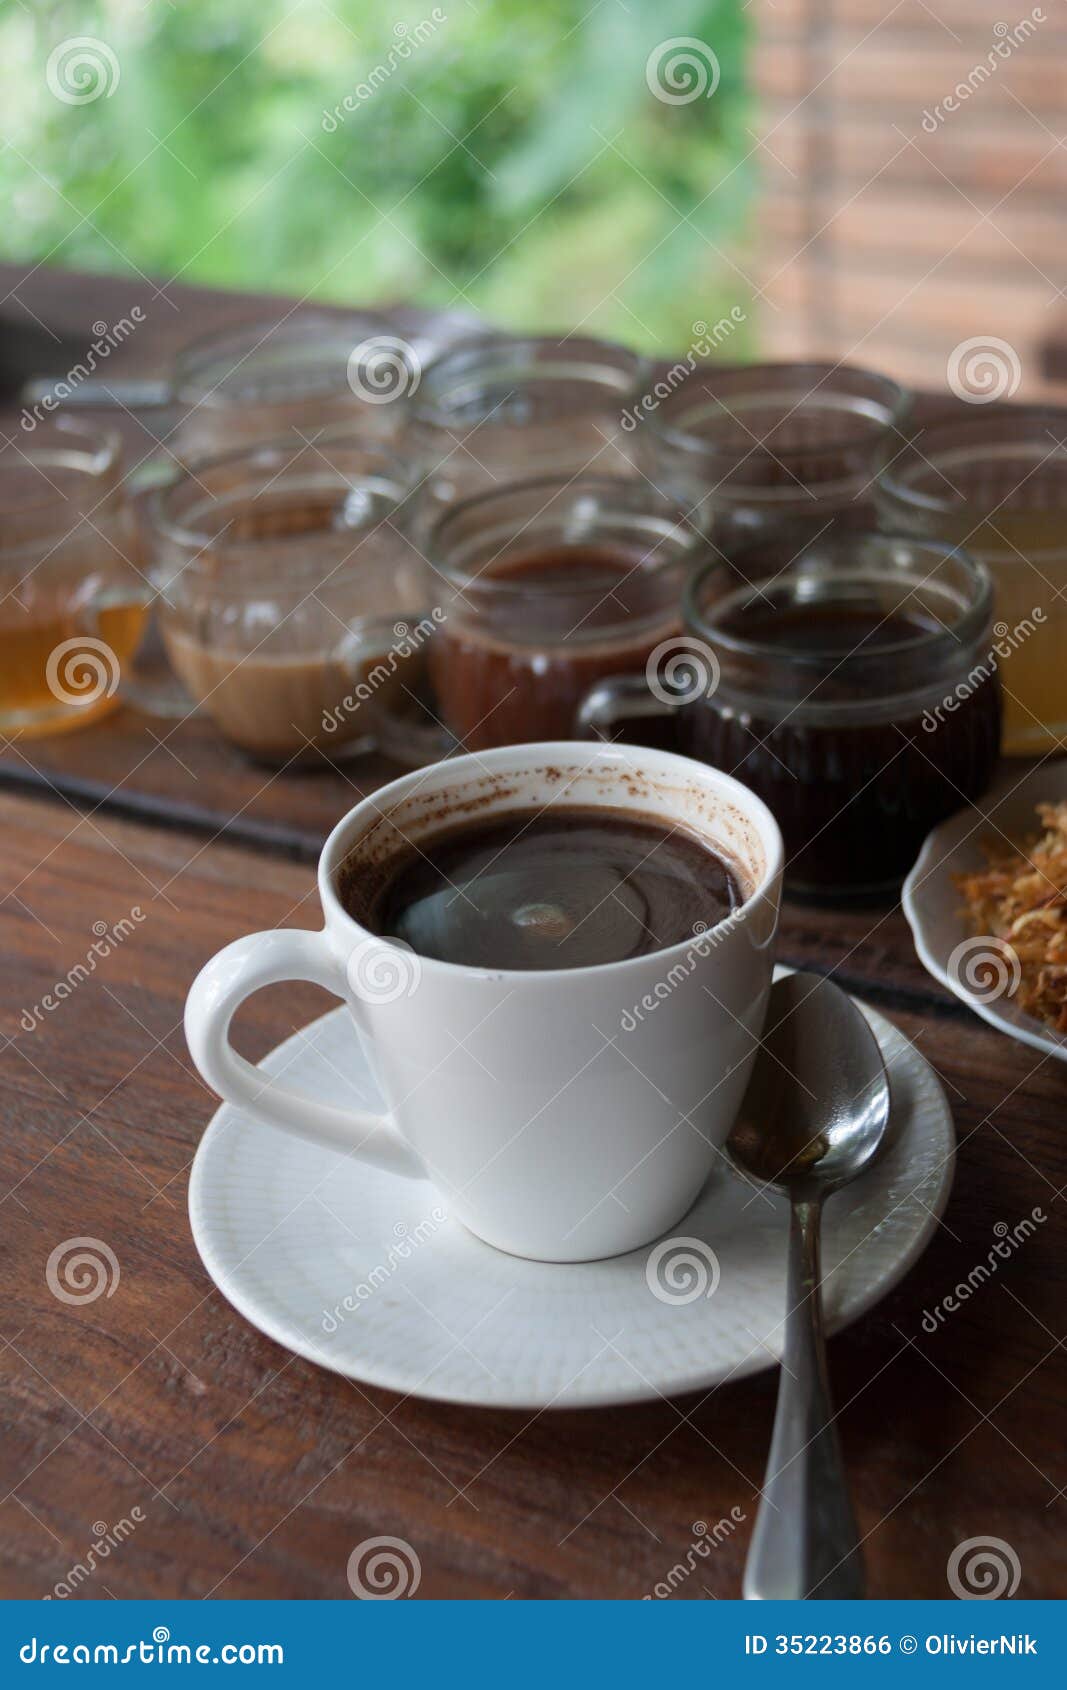 balinese civet coffee